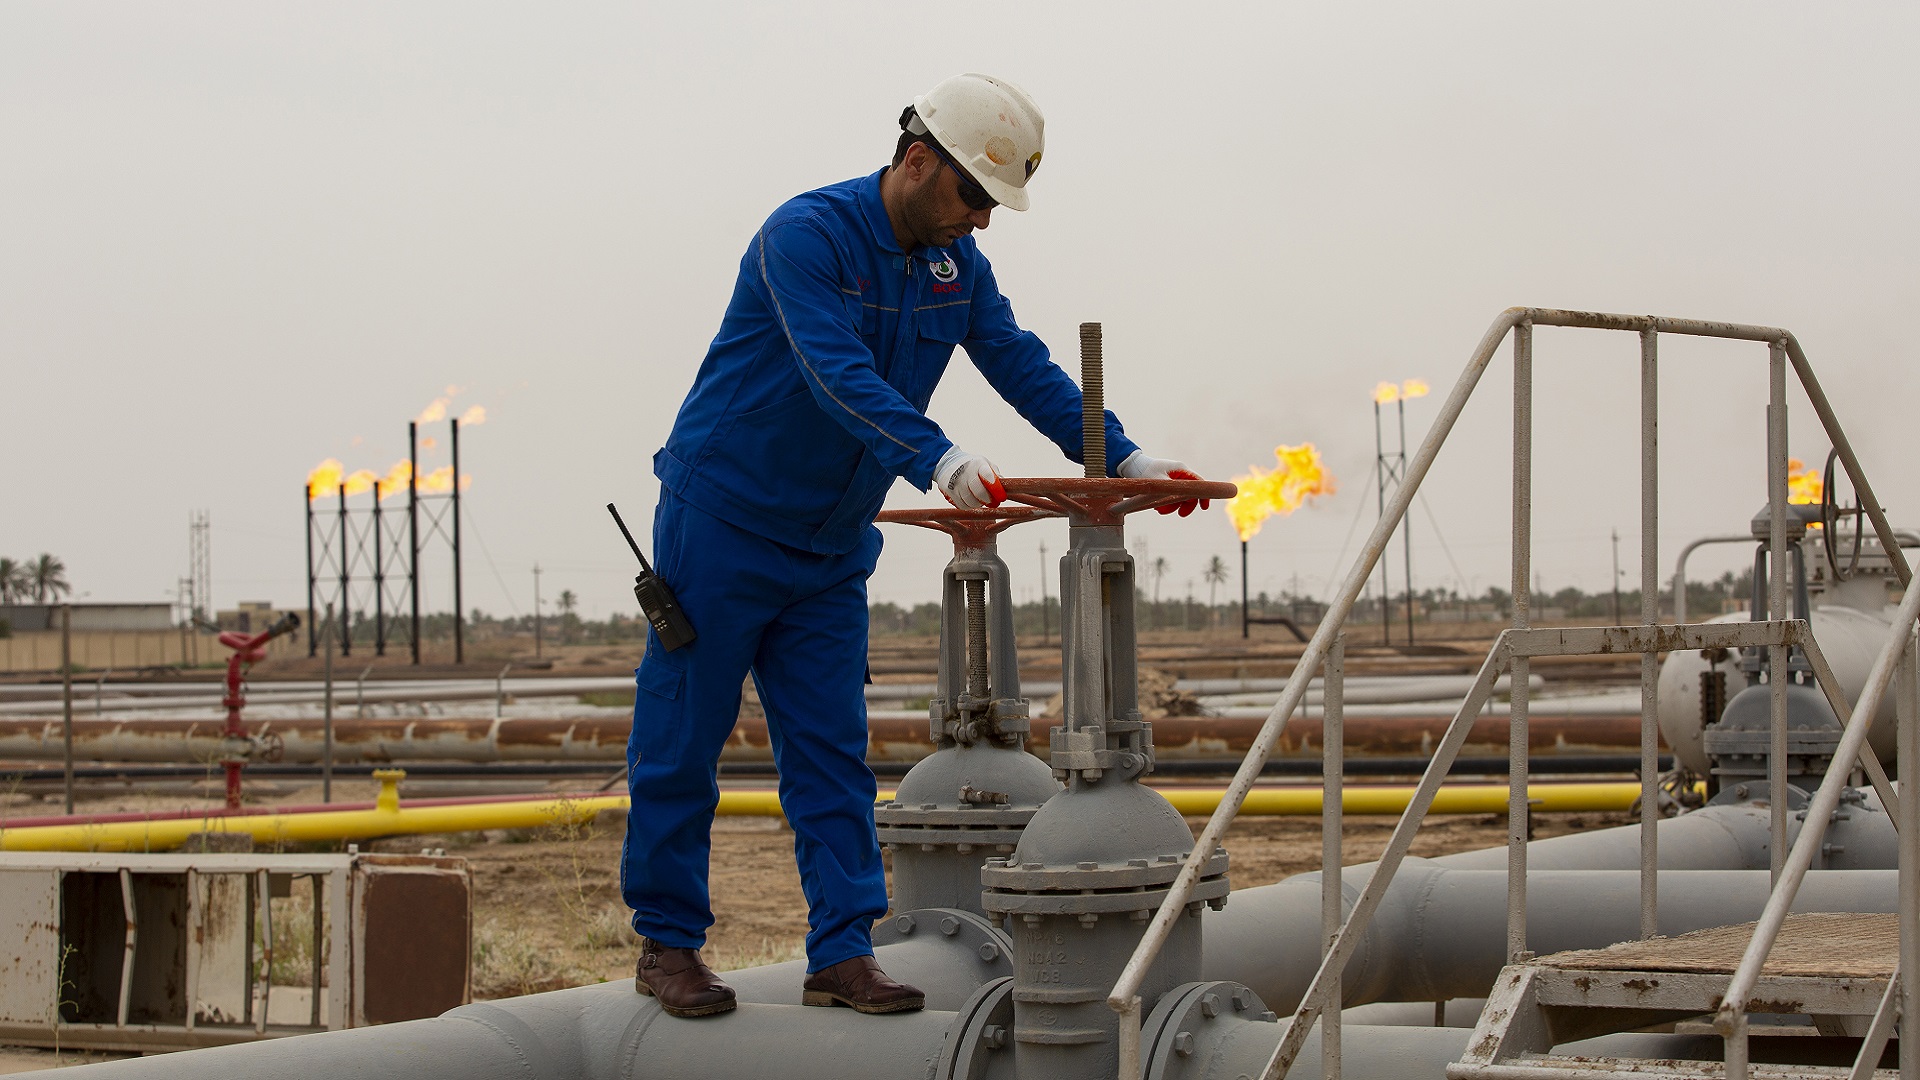 Arab economies take massive shocks following oil price crash